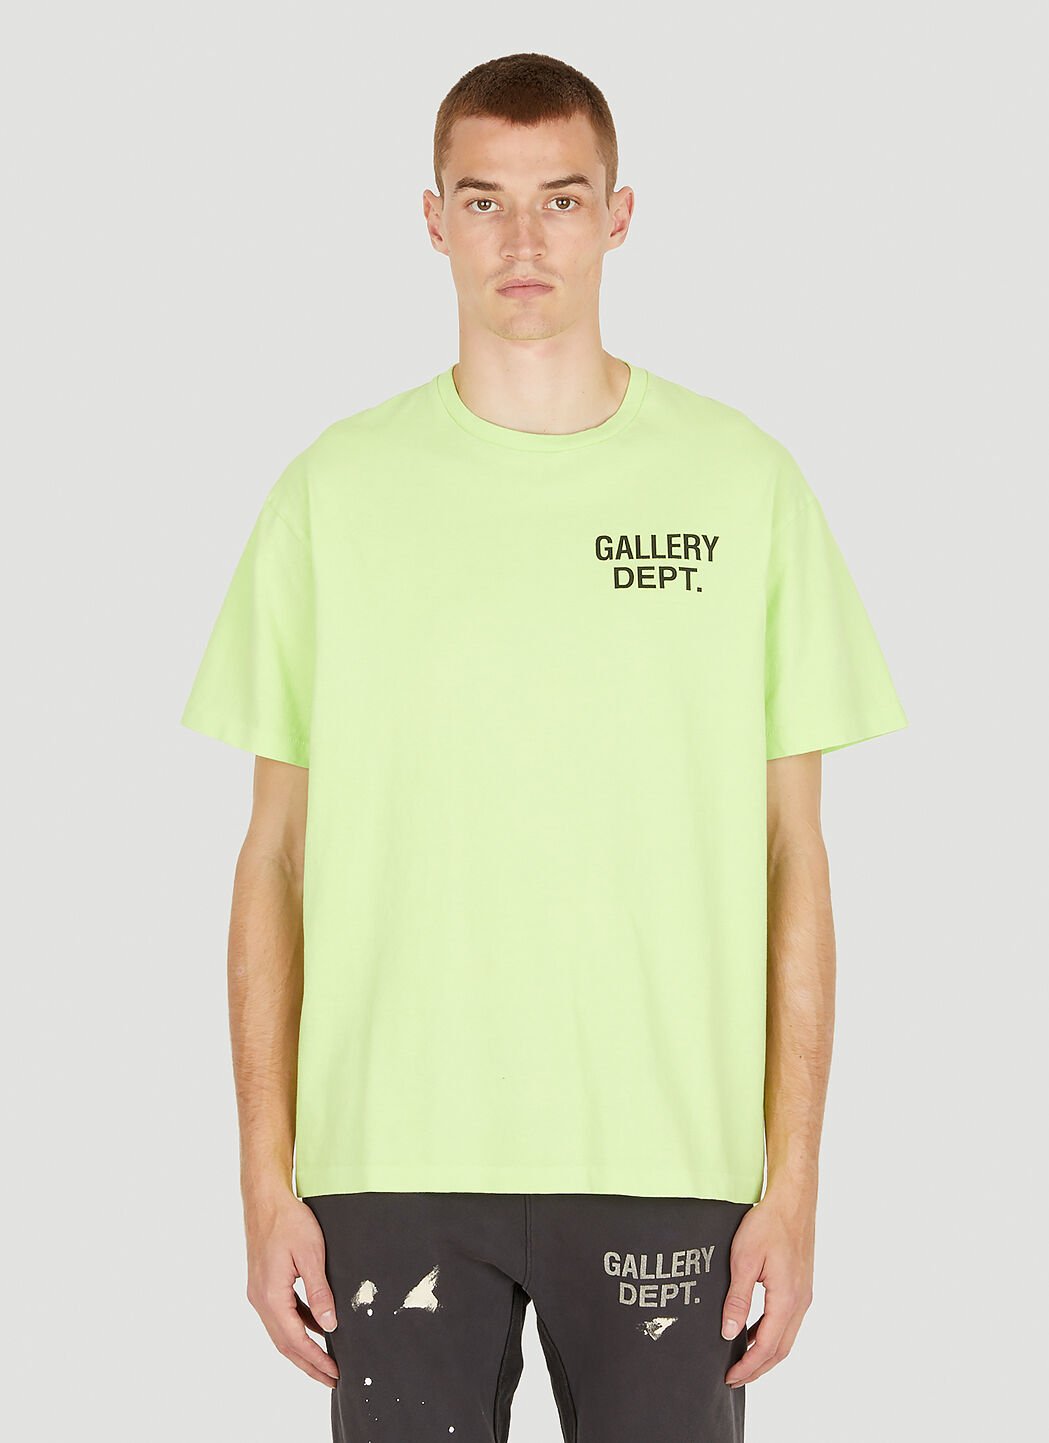 Gallery Dept. Souvenir T-Shirt White gdp0153039